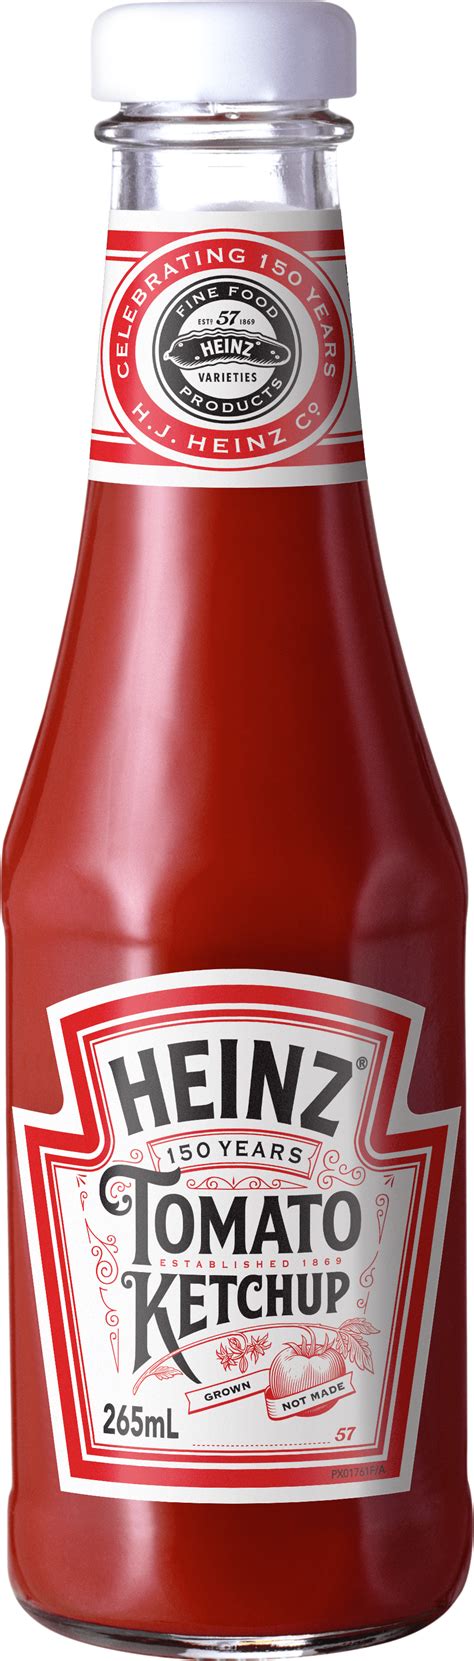 Heinz Tomato Ketchup 265ml Food Service